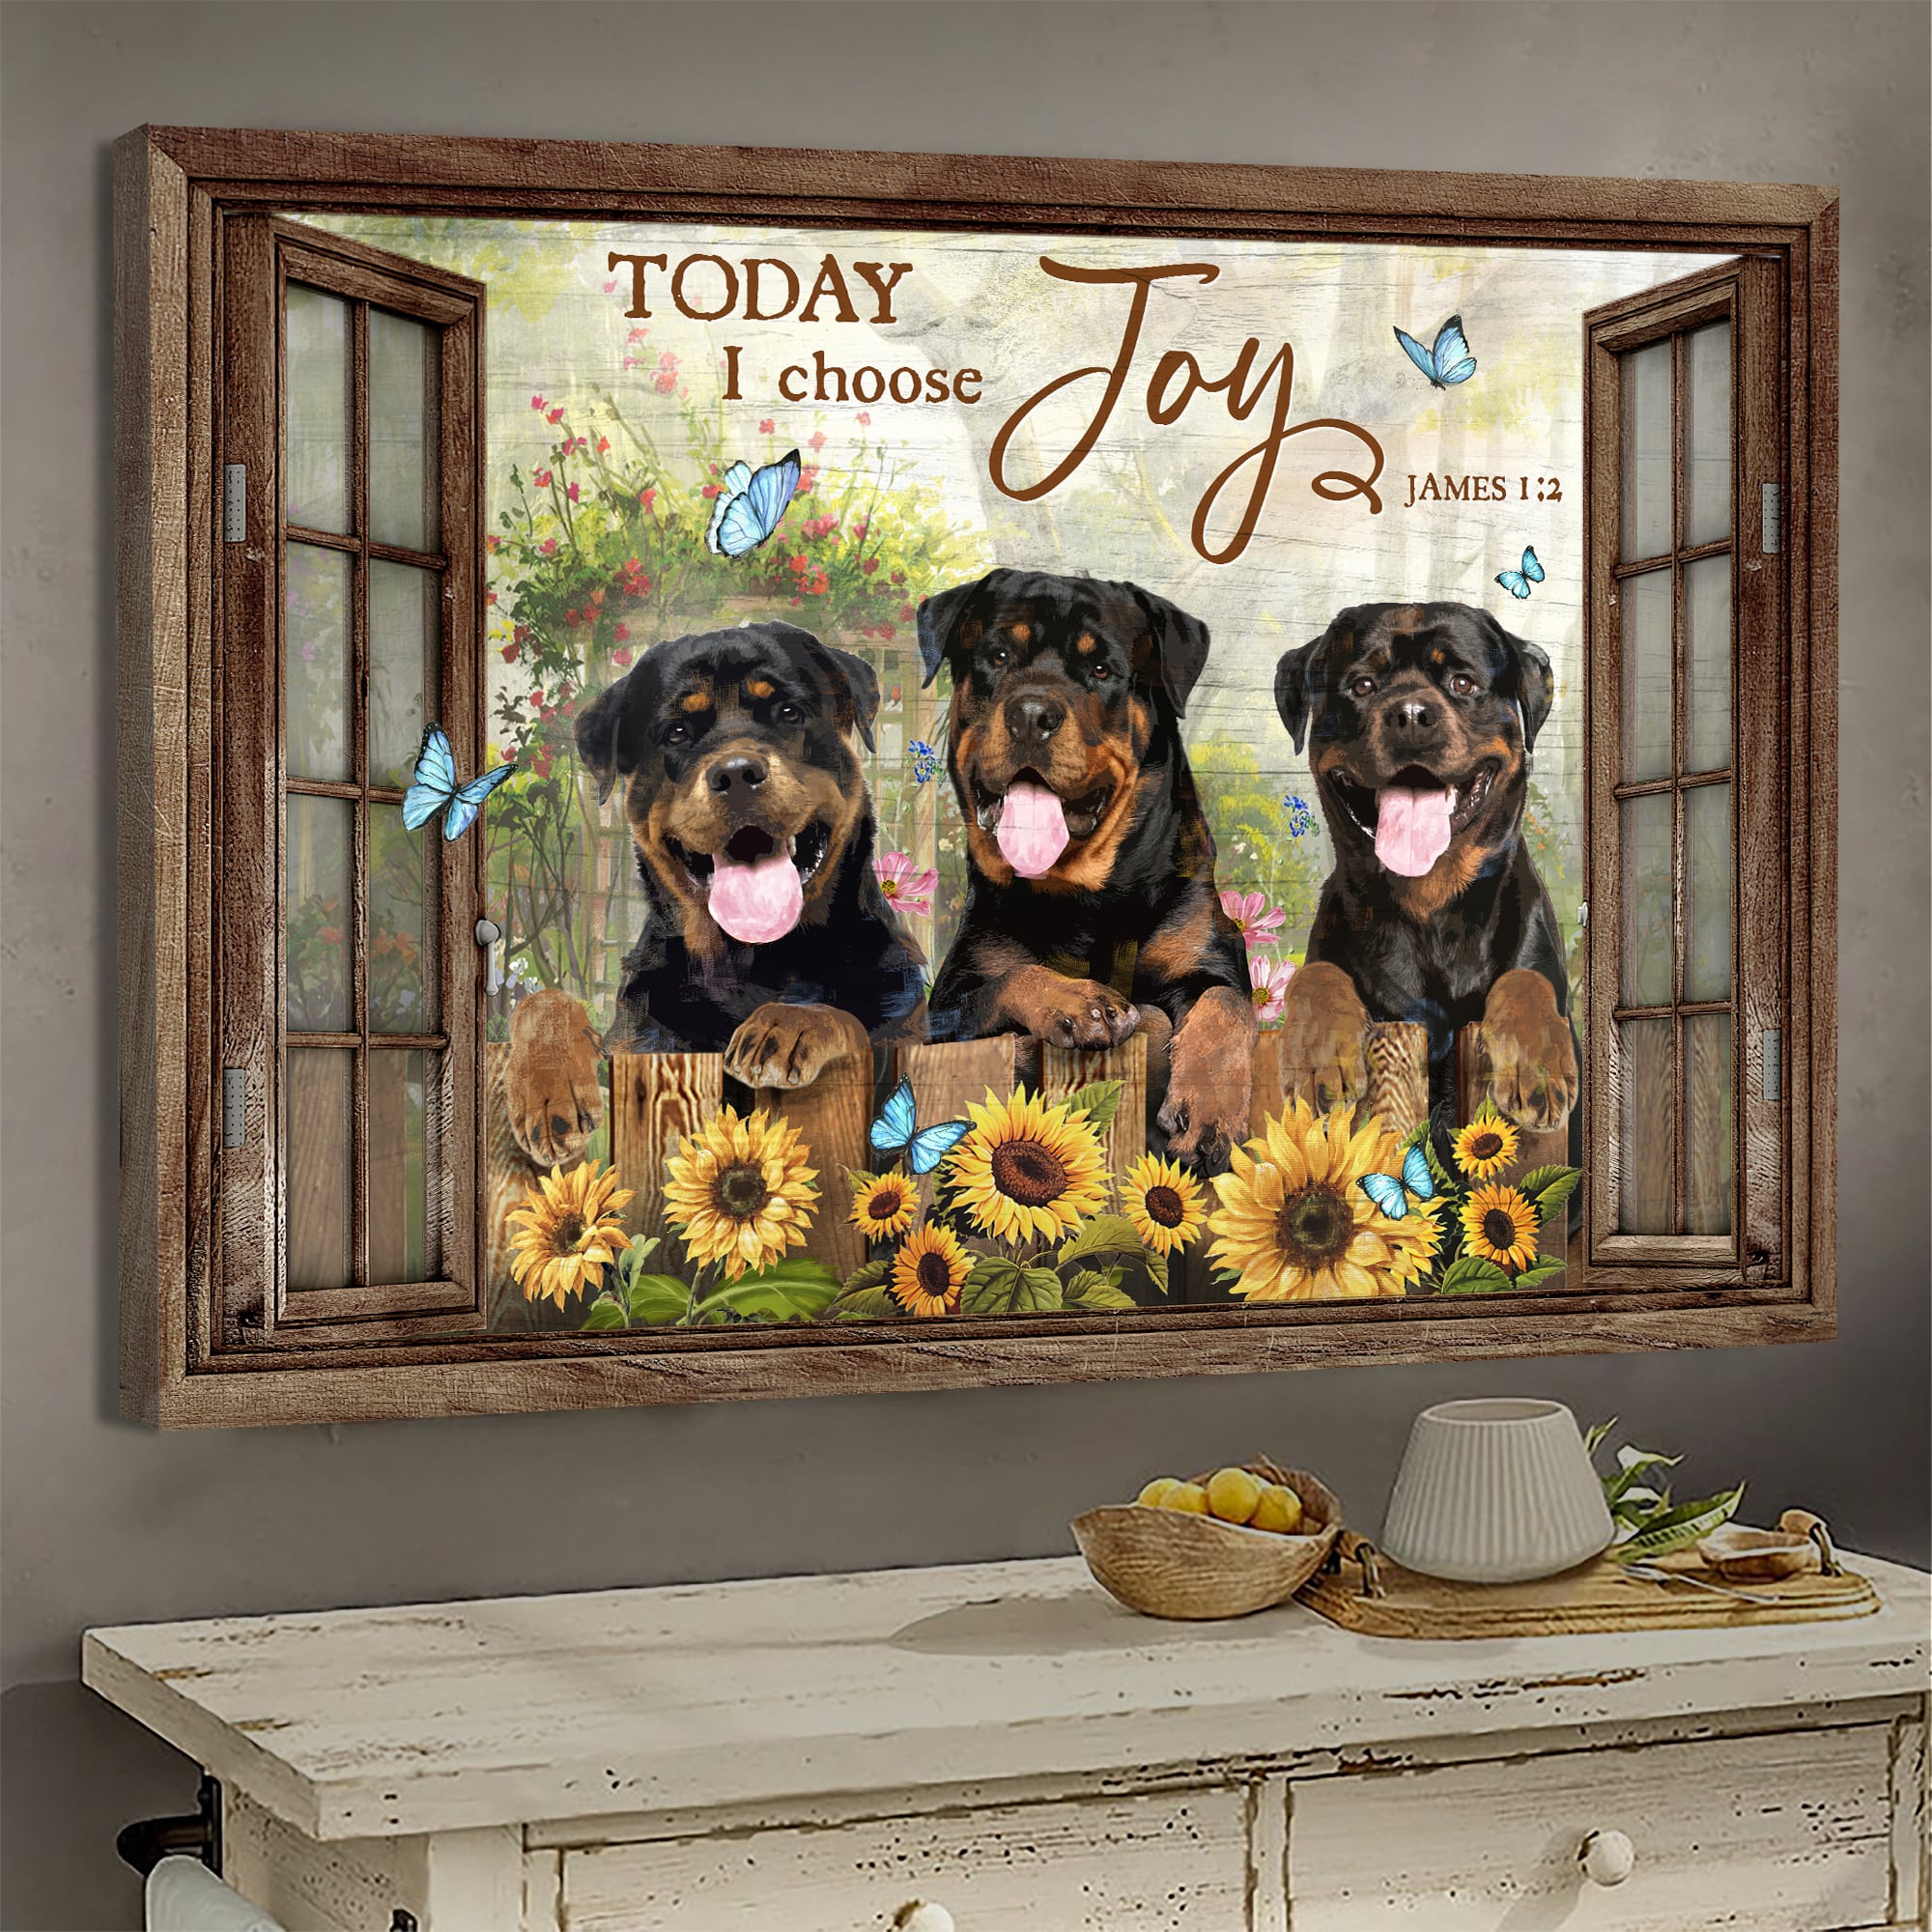 Rottweiler, Sunflower painting, Wooden window, Today I choose joy - Rottweiler Landscape Canvas Prints, Wall Art